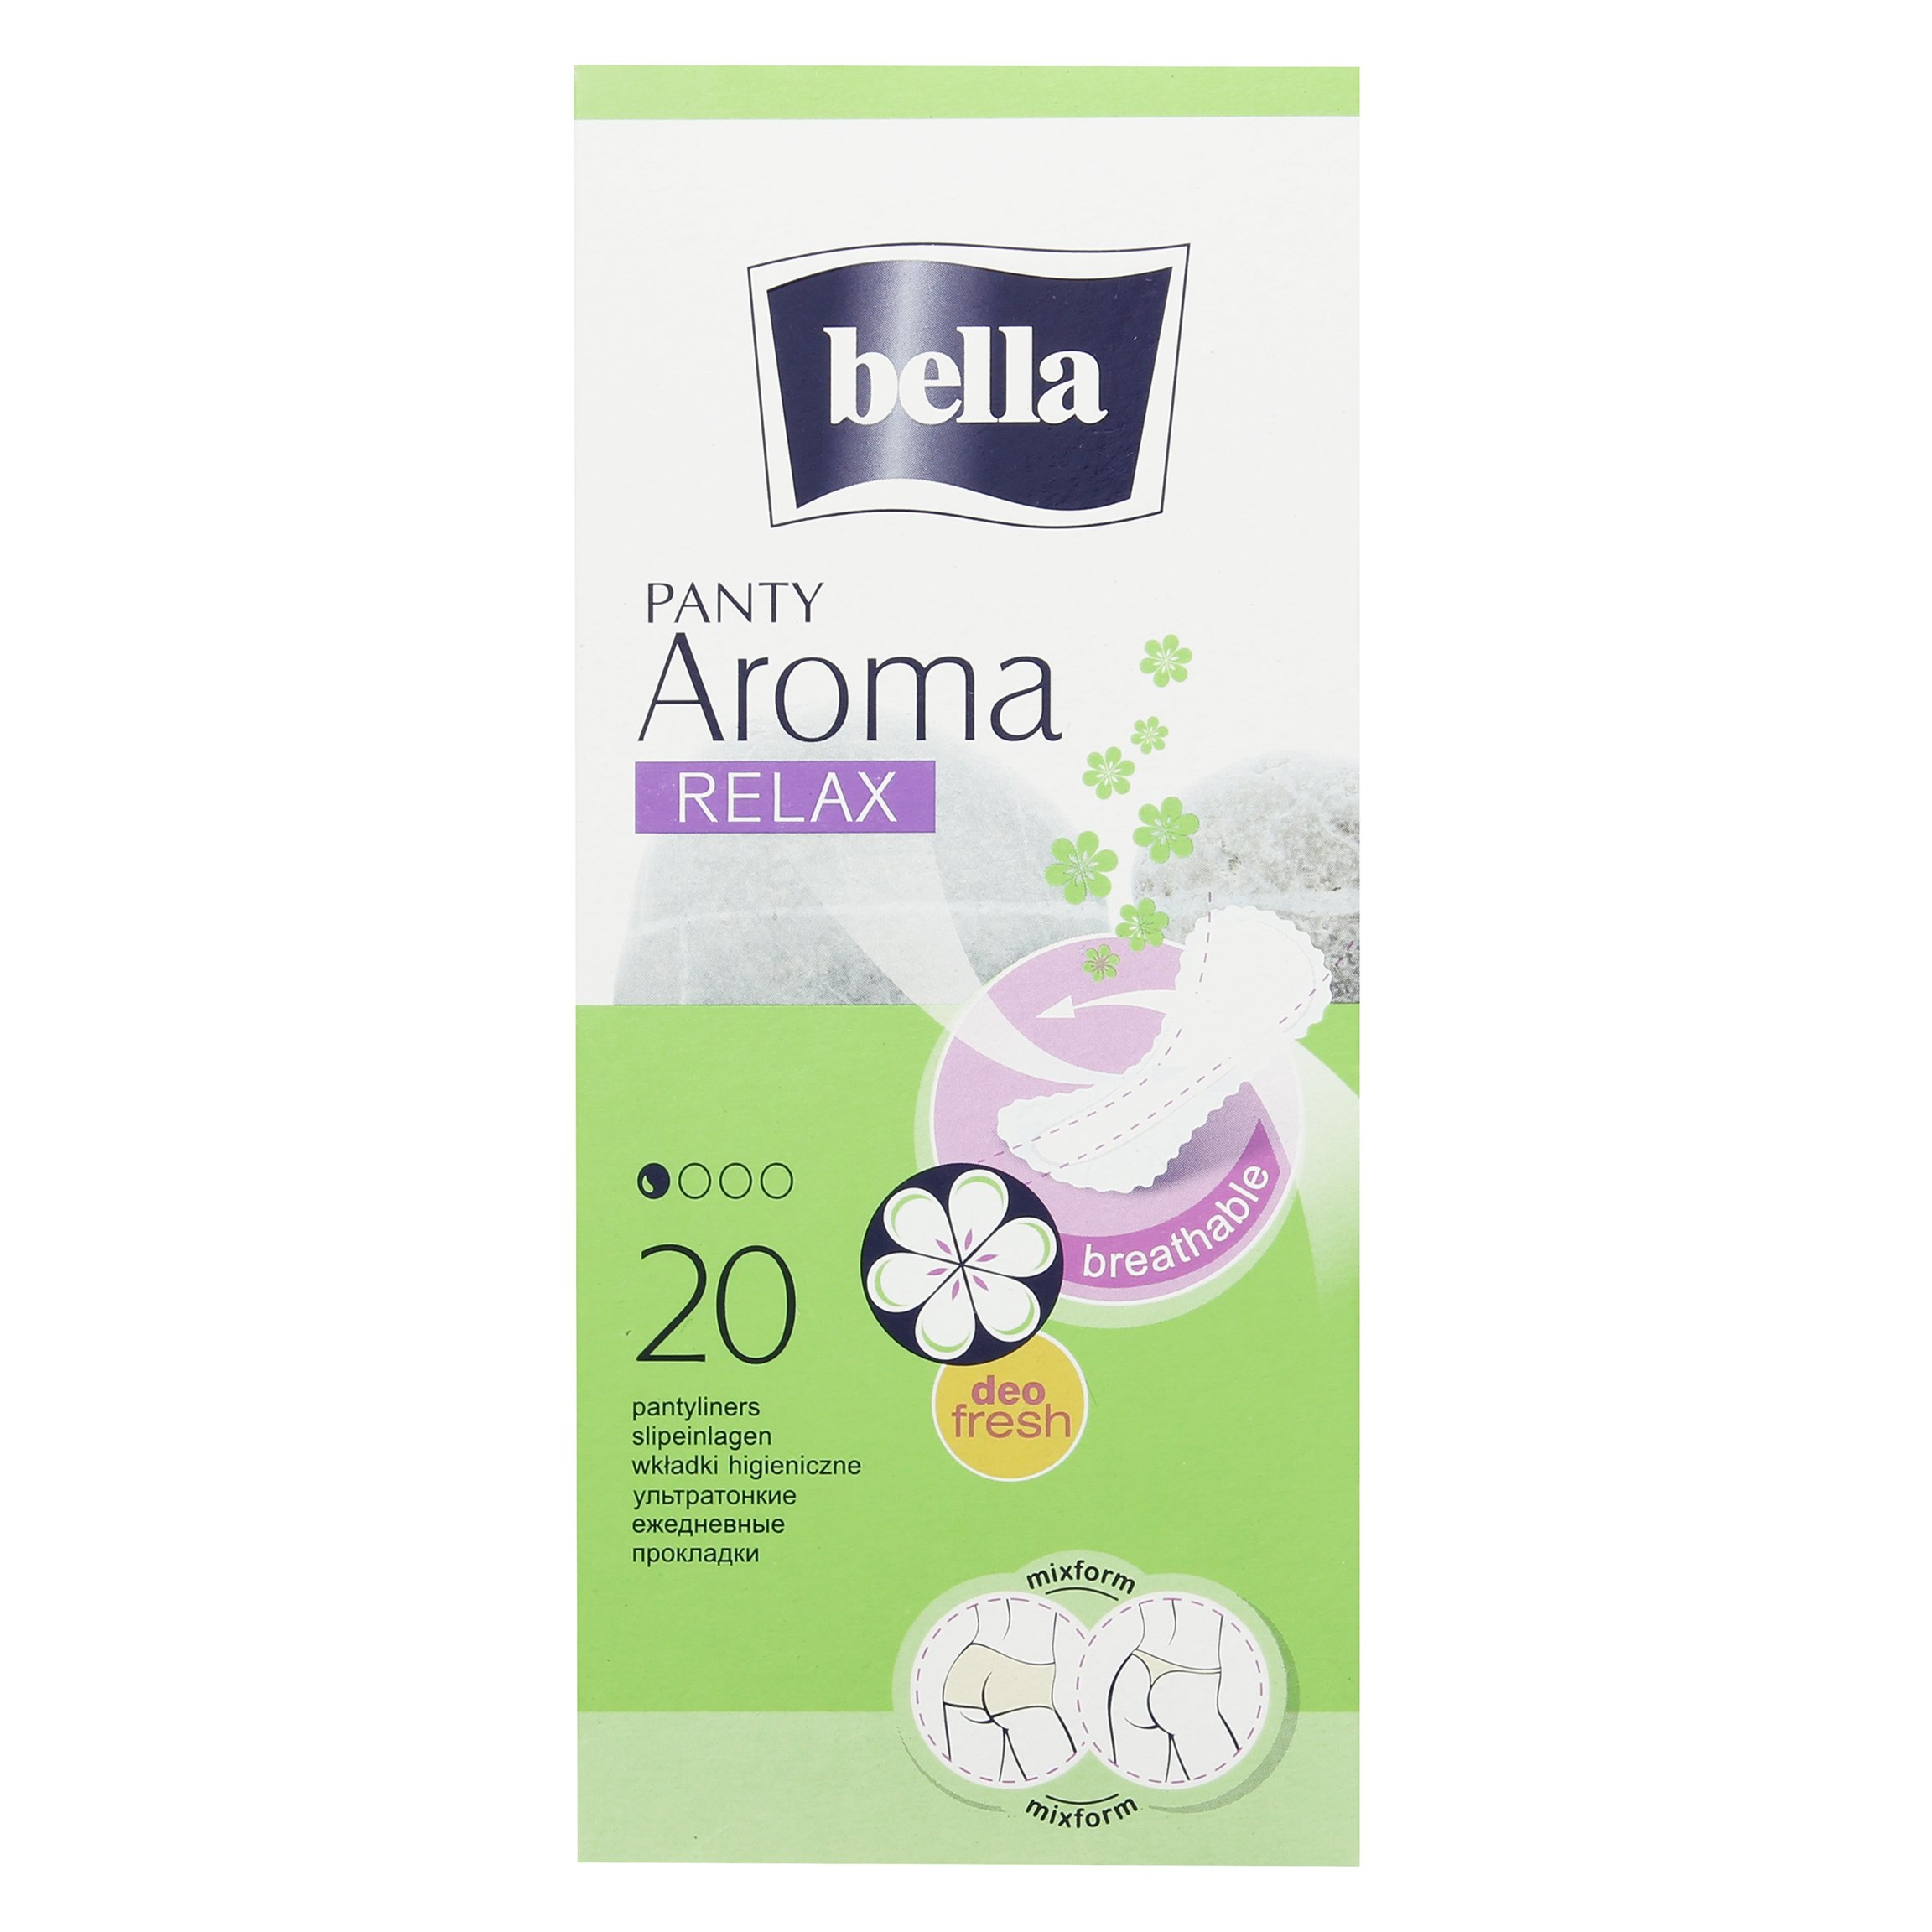 Ежедневные прокладки Bella Panty Aroma Relax 20 шт. - фото 4